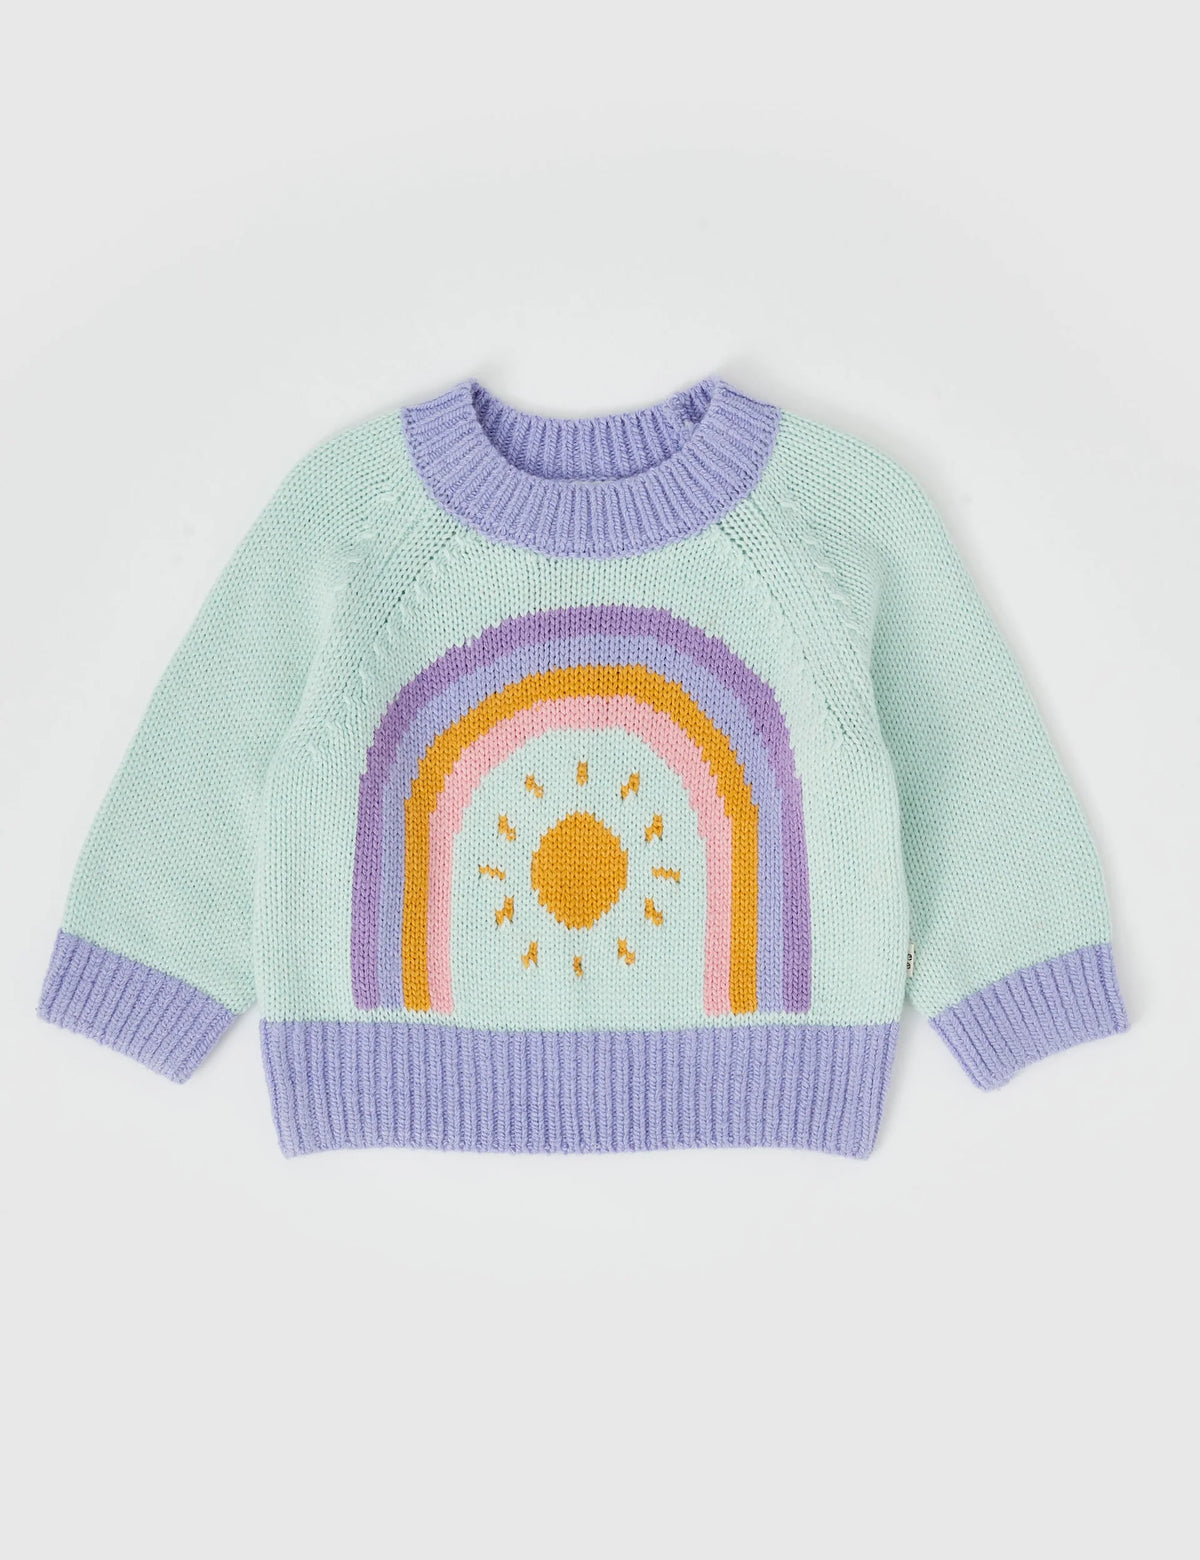 goldie + ace marley rainbow knit jumper